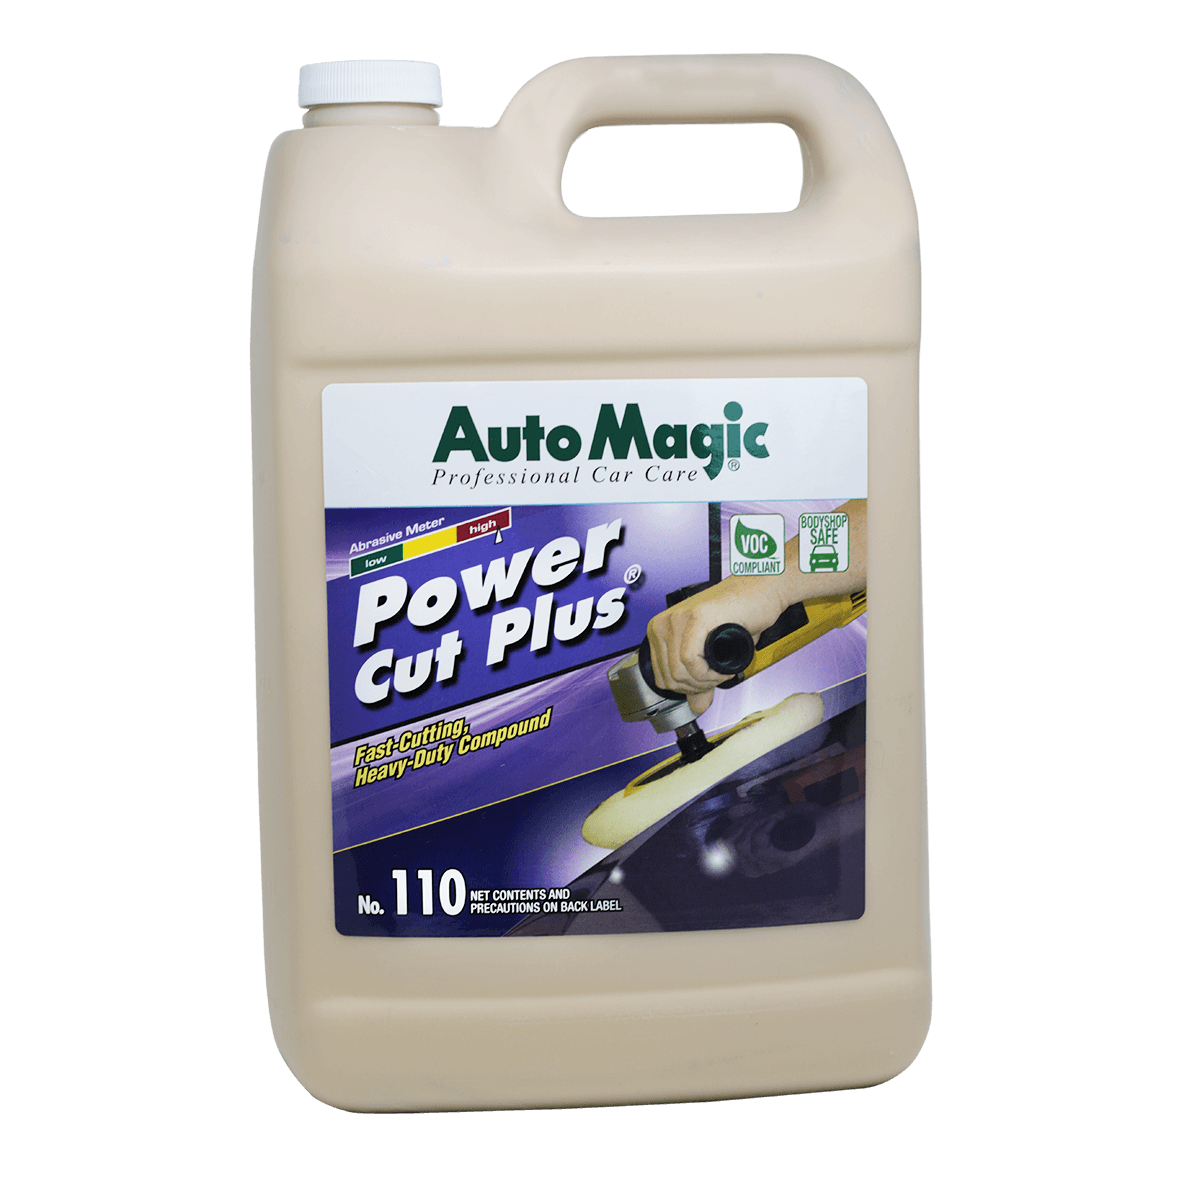 Auto Magic Power Cut Plus thumbnail